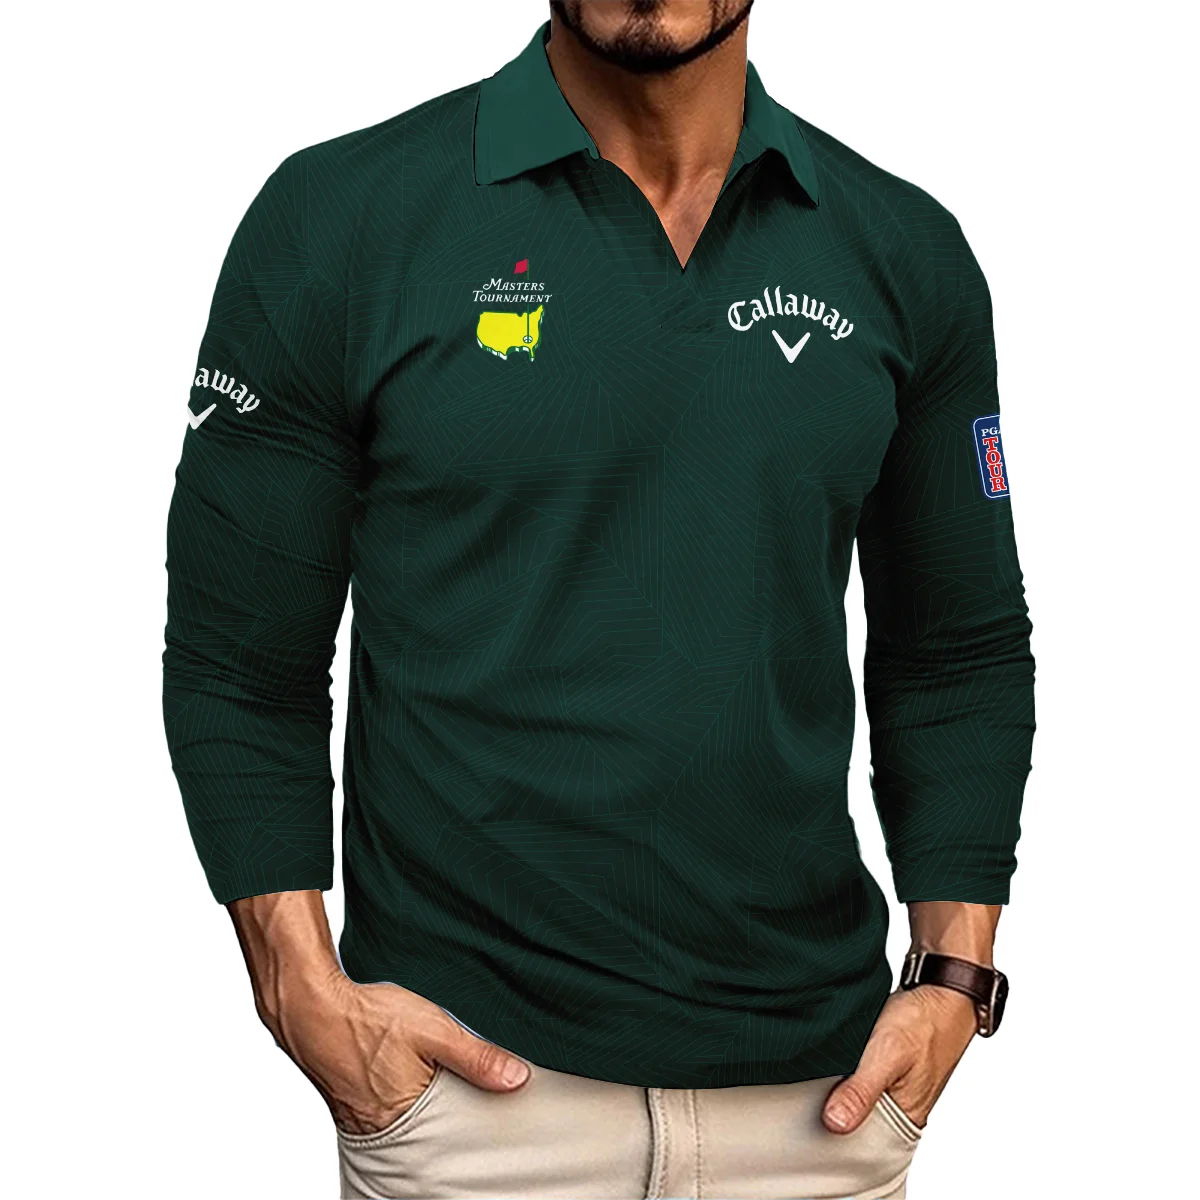 Masters Tournament Callaway Pattern Sport Jersey Dark Green Hawaiian Shirt Style Classic Oversized Hawaiian Shirt